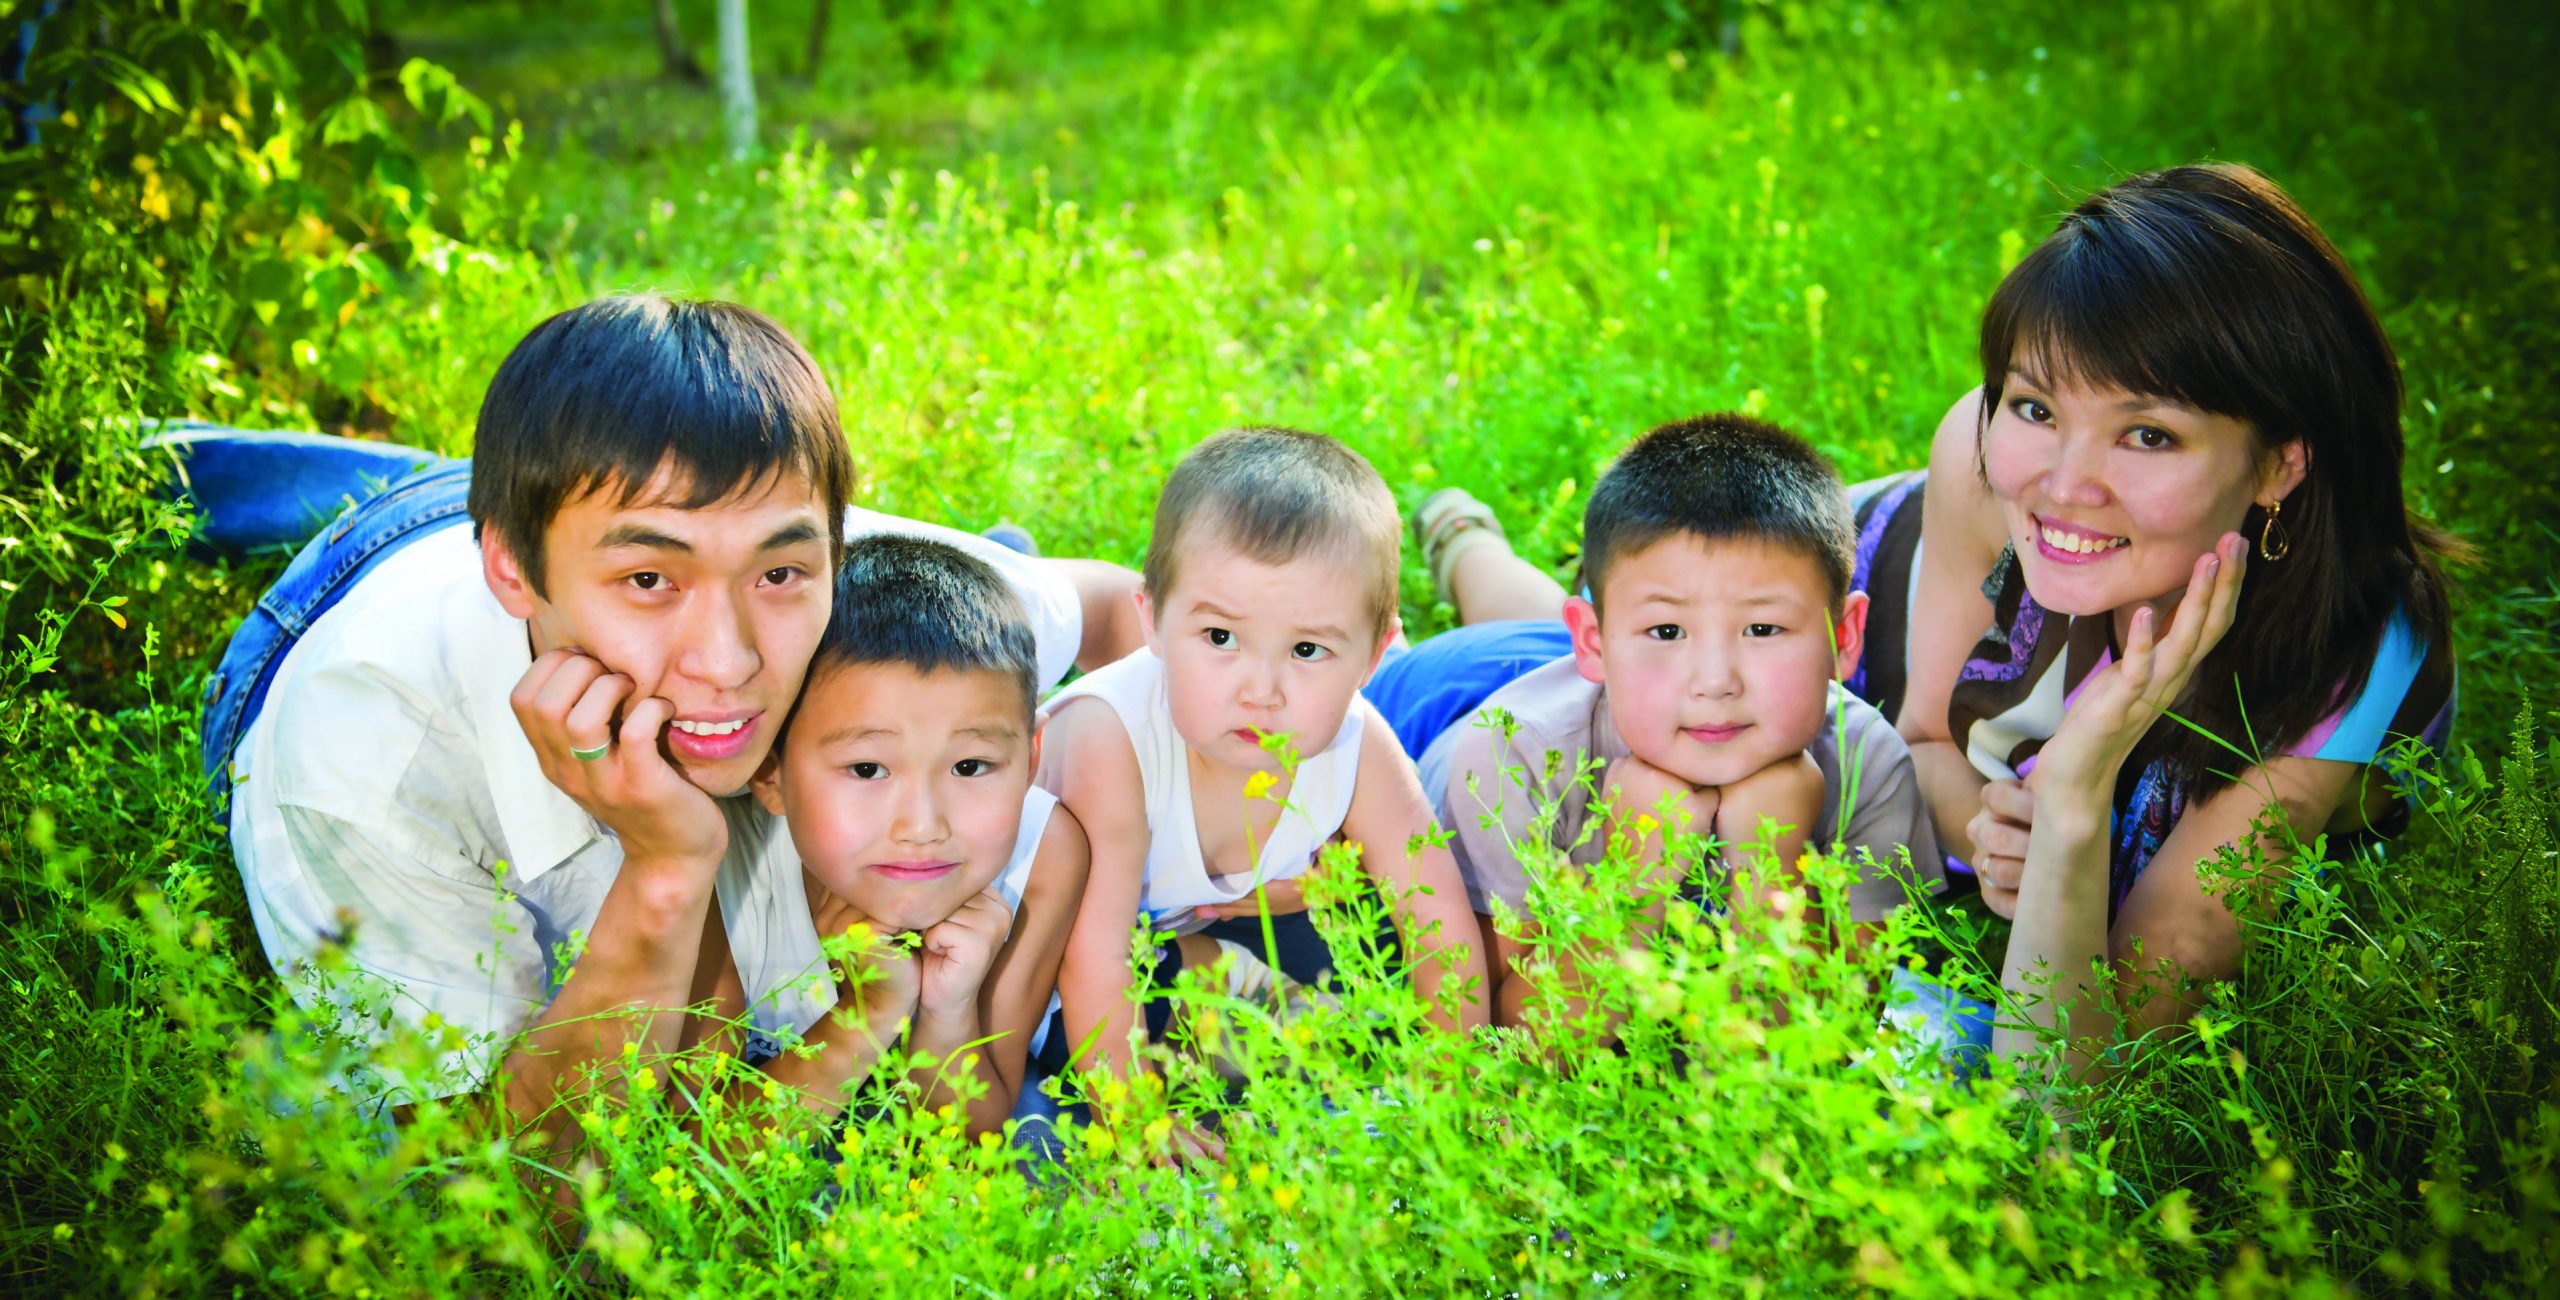 Картинка дети казахстана. Семья казахов. Счастливая казахская семья. Семей Казахстан. Казахская семья с ребенком.